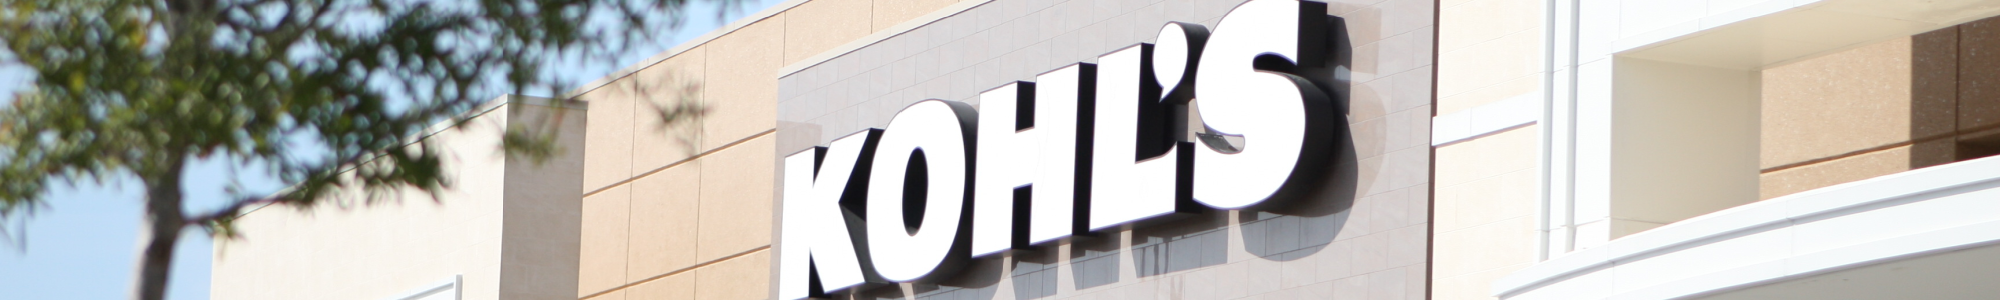 Kohl's banner image